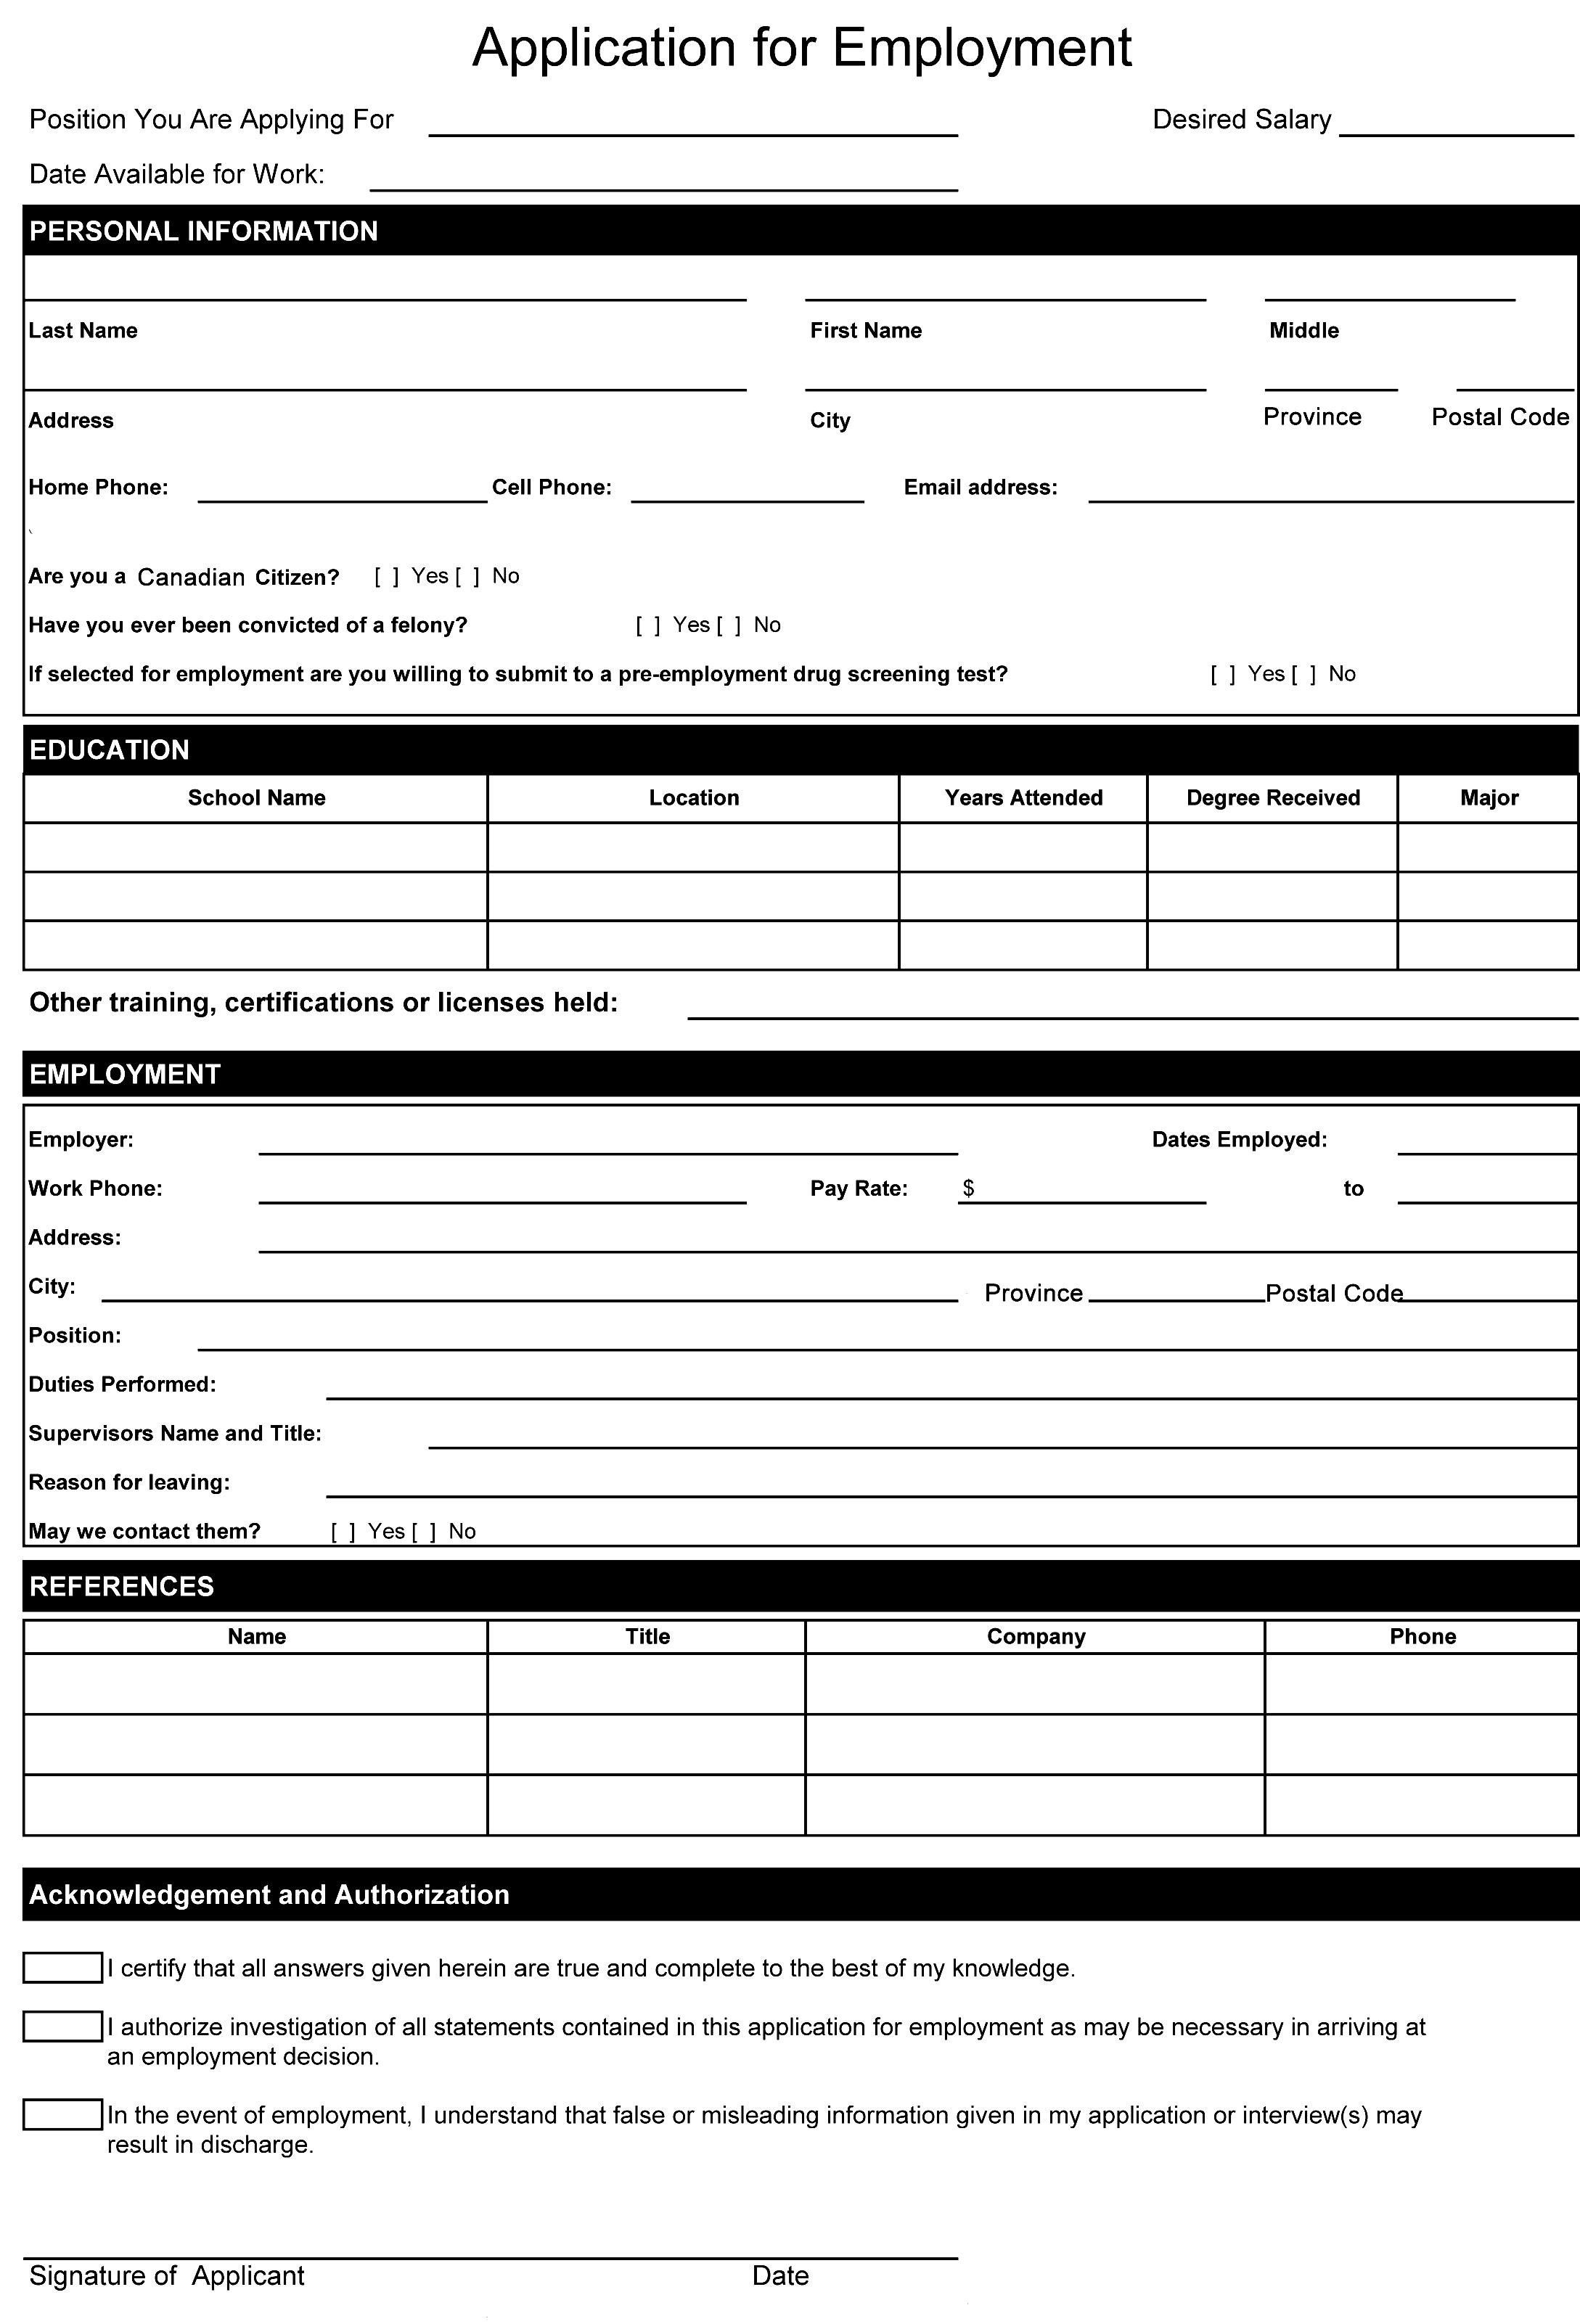 Resume Format Word Document | Resume Format | Job Application Form - Free Printable Job Application Form